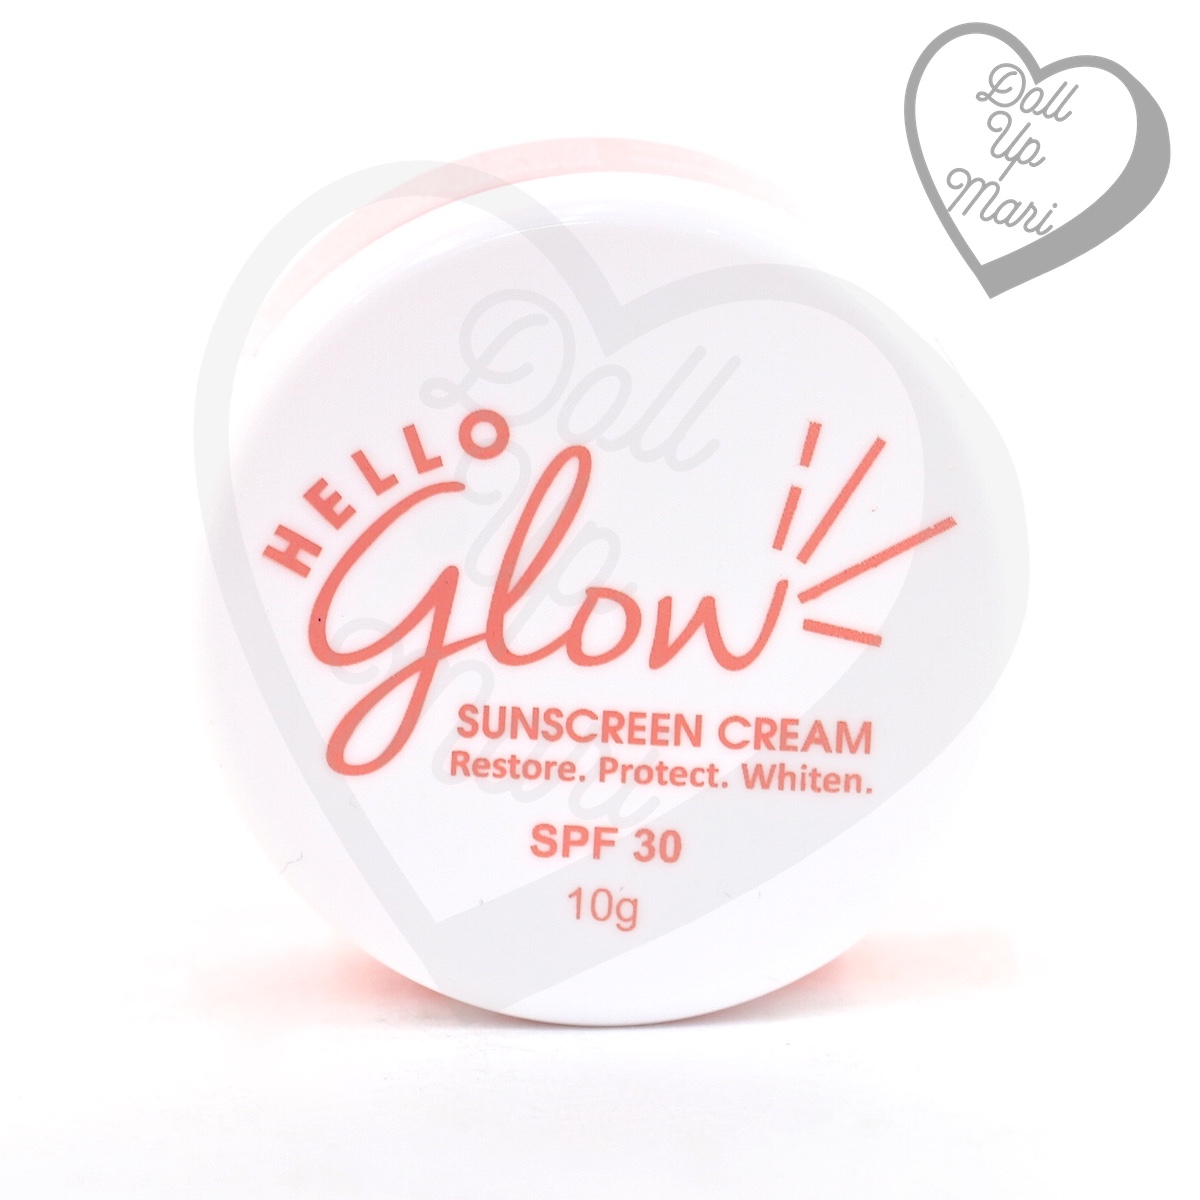 Hello Glow by Ever Bilena Sunscreen Cream jar cover